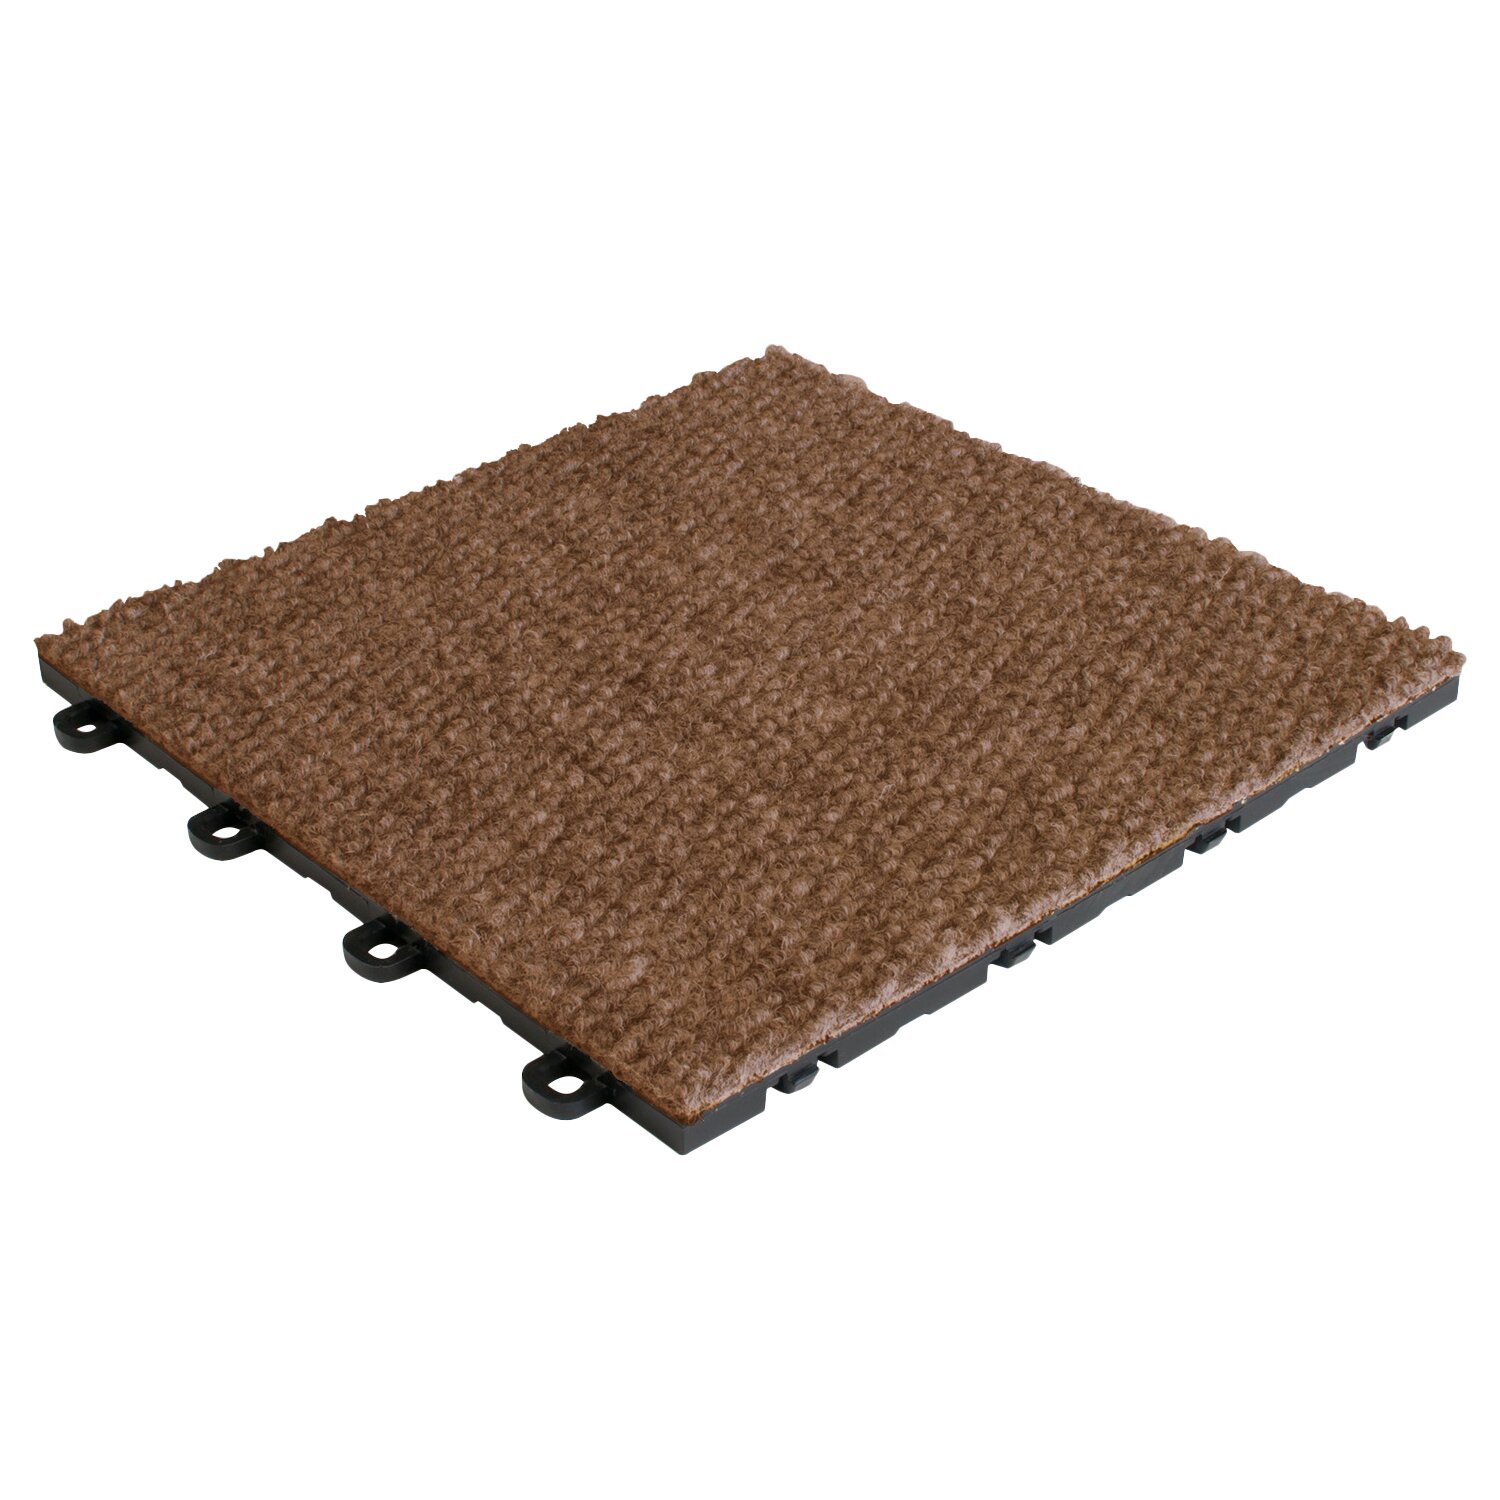 BlockTile 12 X 12 Premium Interlocking Basement Floor Carpet Tile In Brown B4US5220 